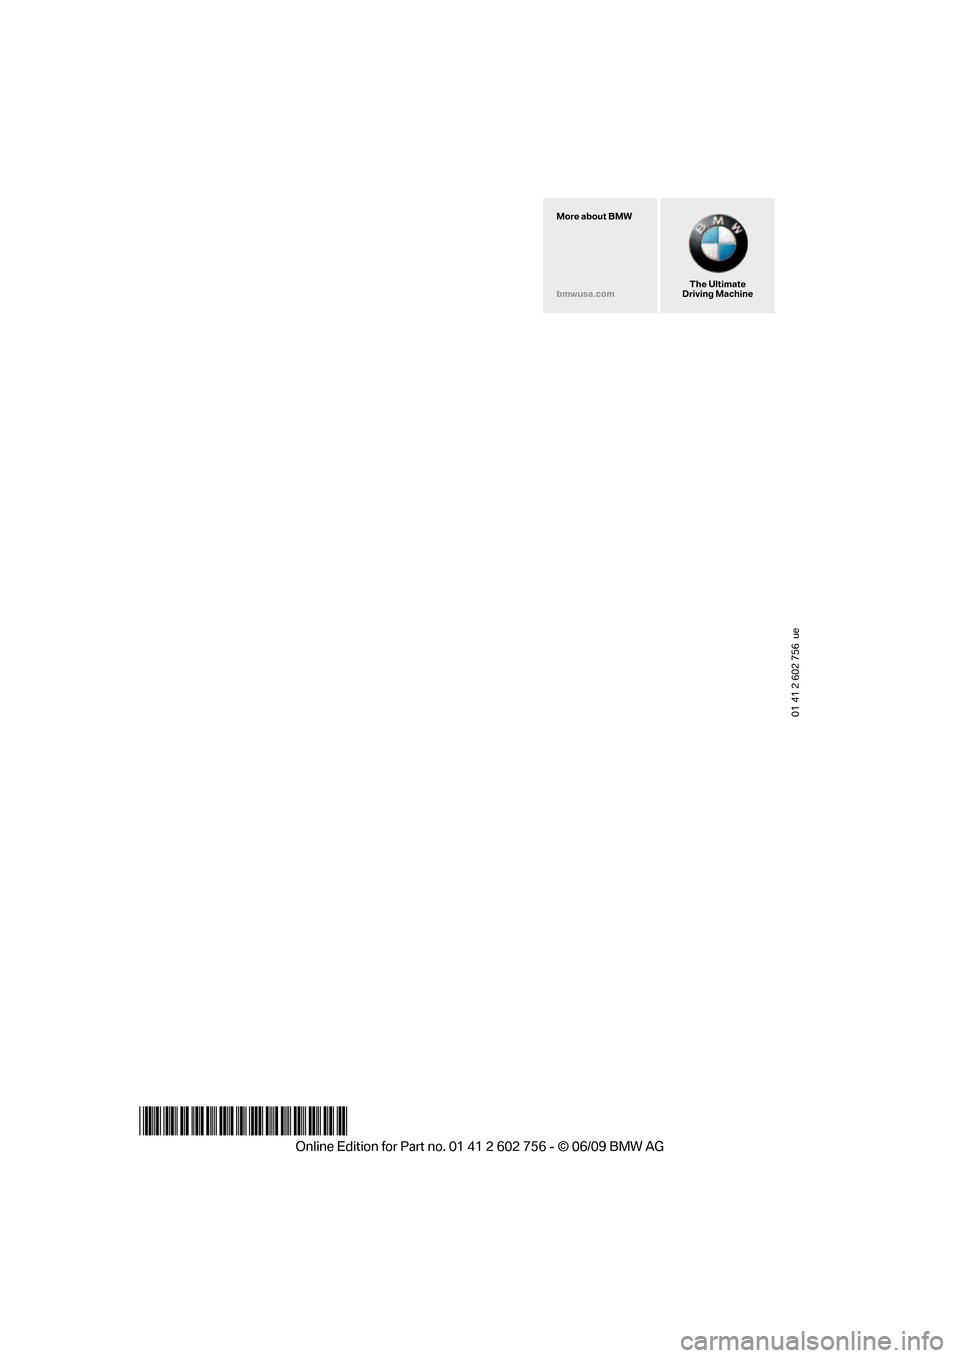 BMW X5 2010 E70 Owners Manual 01 41 2 602 756  ue
*BL2602756004*
The Ultimate
Driving Machine More about BMW
bmwusa.com
ba8_e70ag.book  Seite 298  Freitag, 5. Juni 2009  11:42 11 